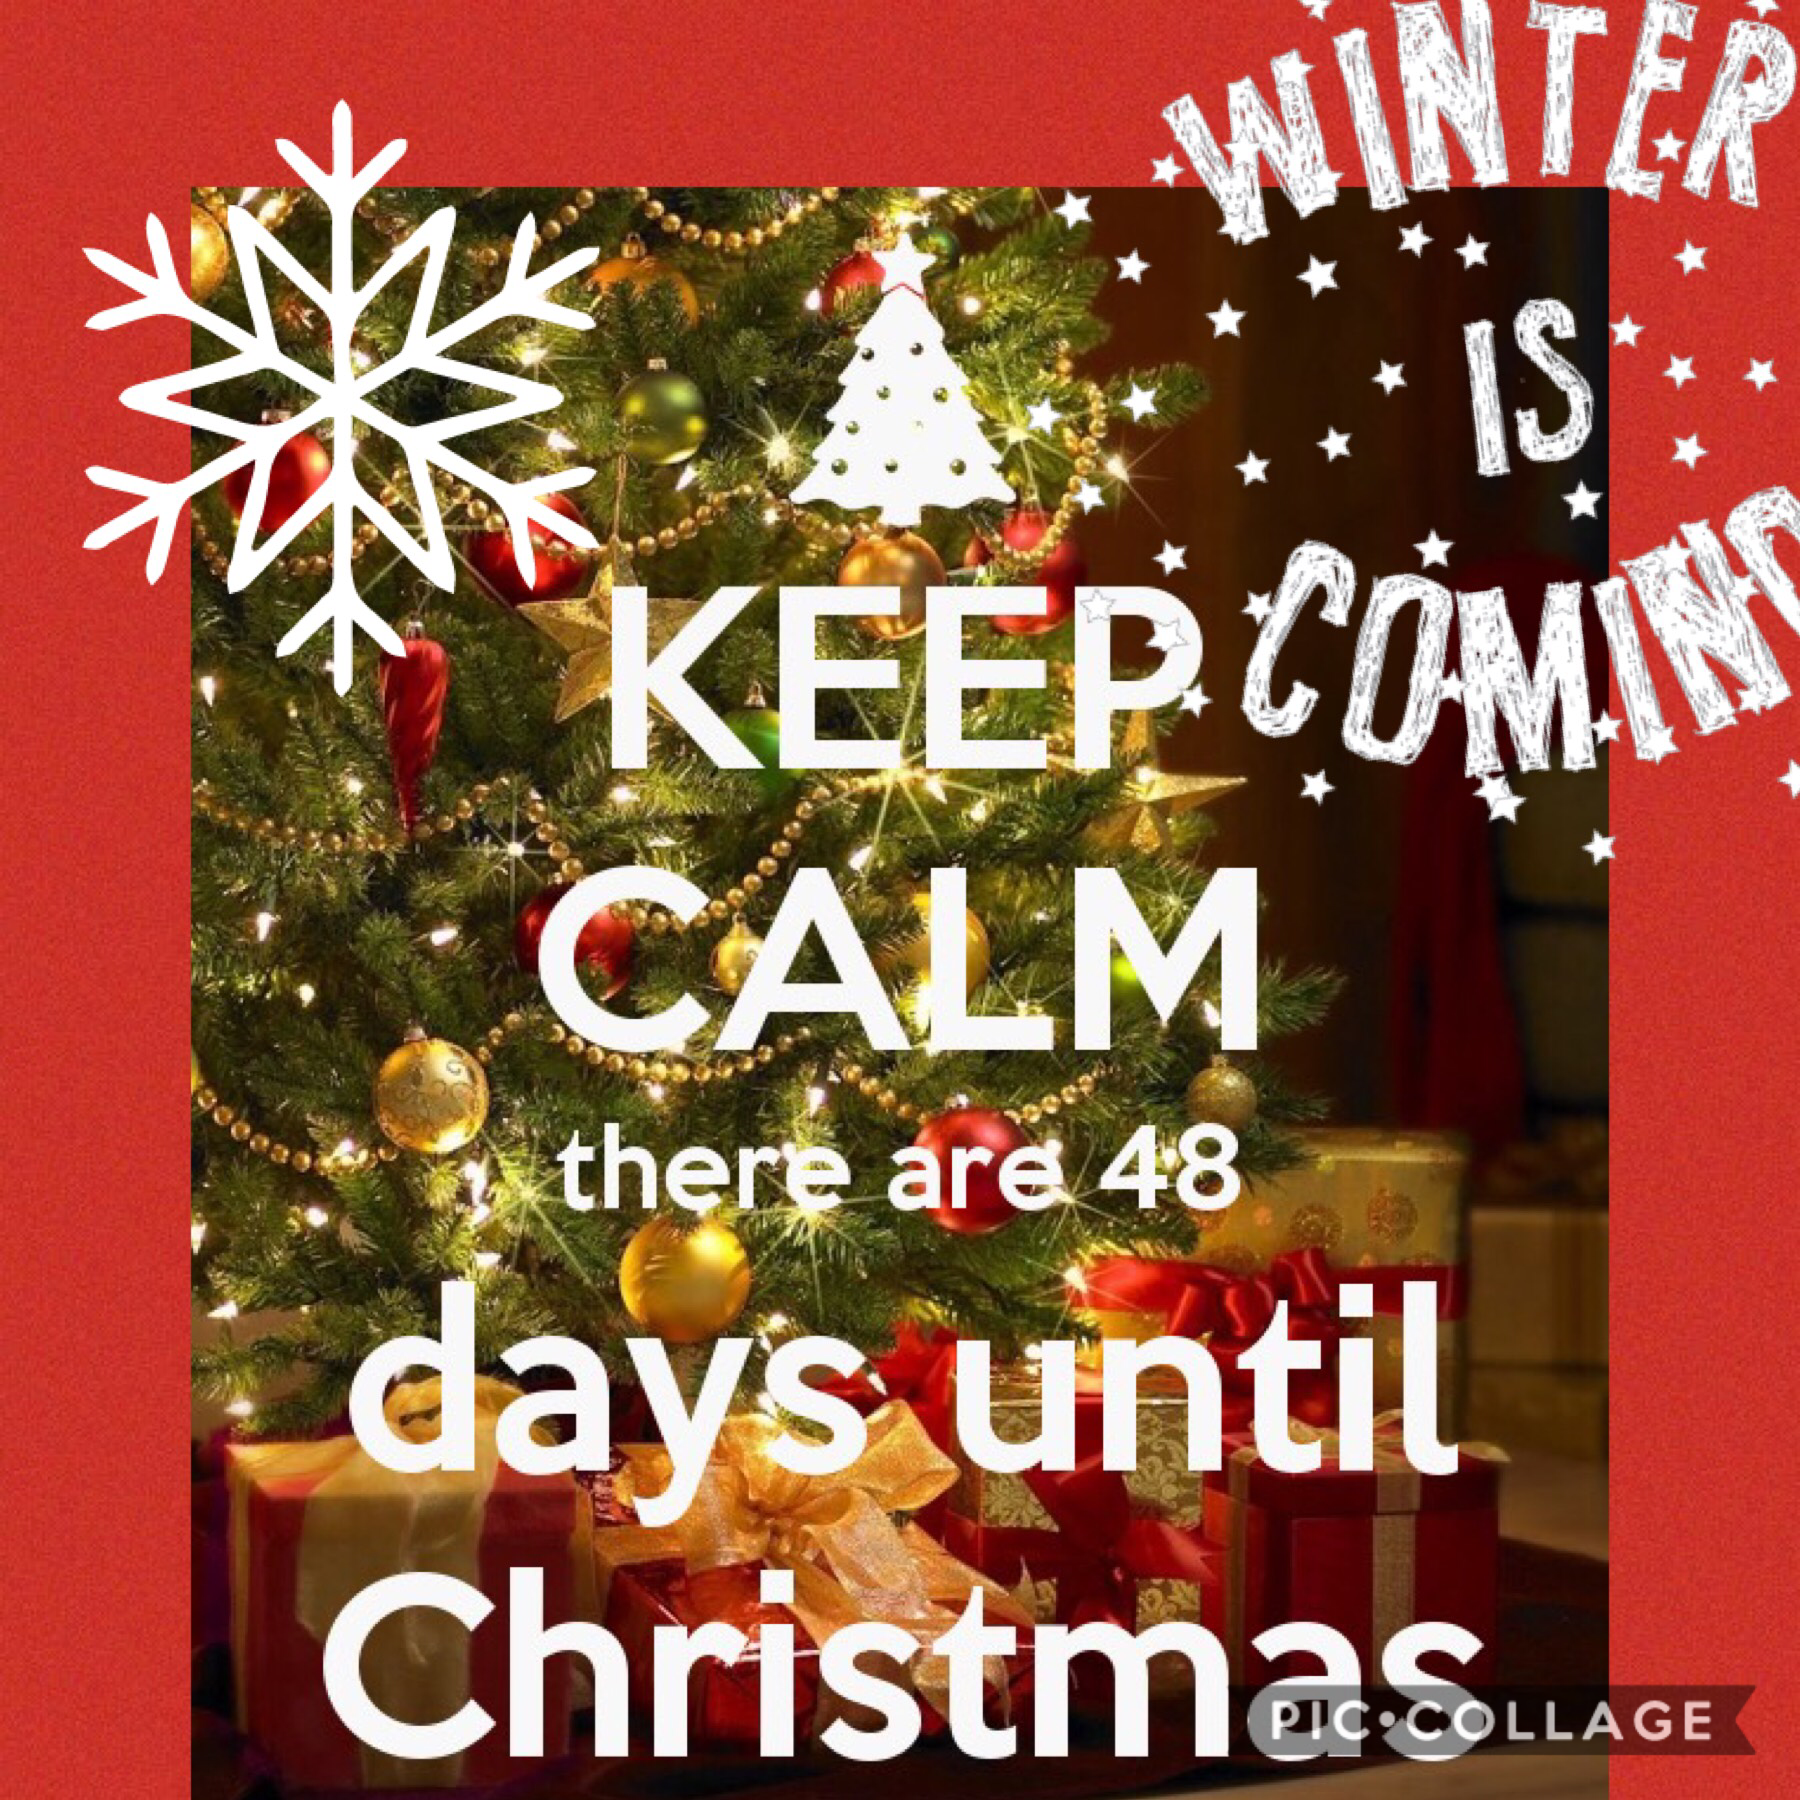 48 days till Christmas!!!! 
Can’t wait 